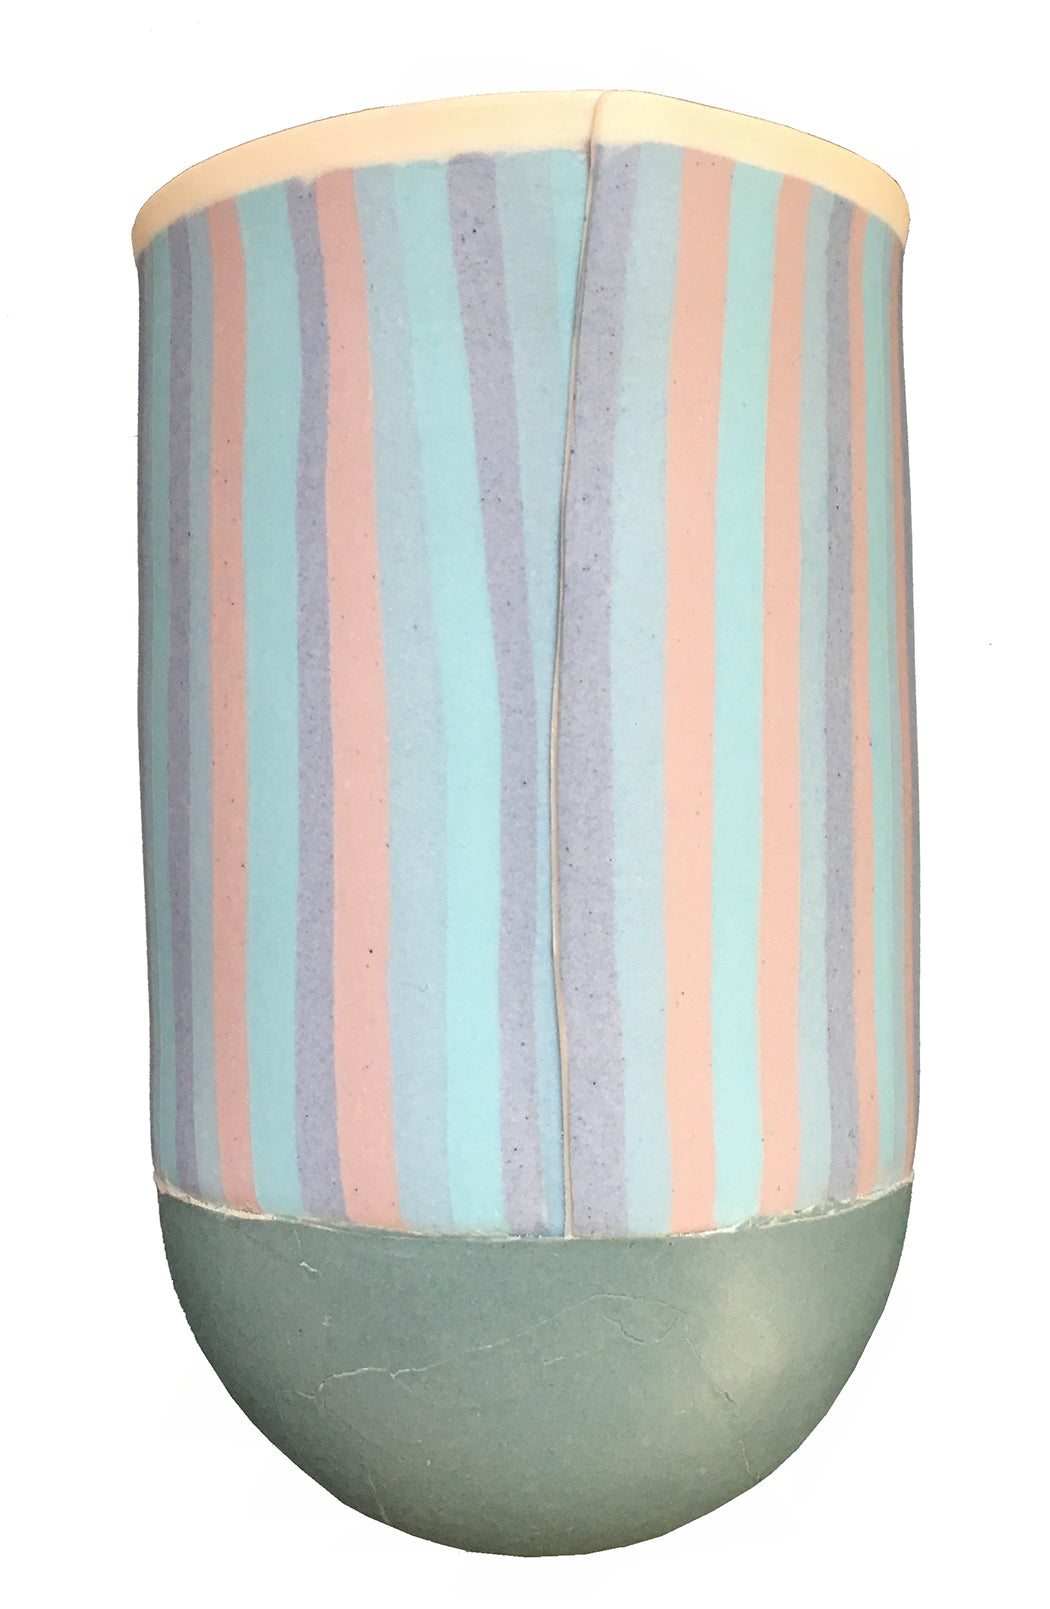 British Studio Pottery Mary White Folded and Striped Vase Vessel